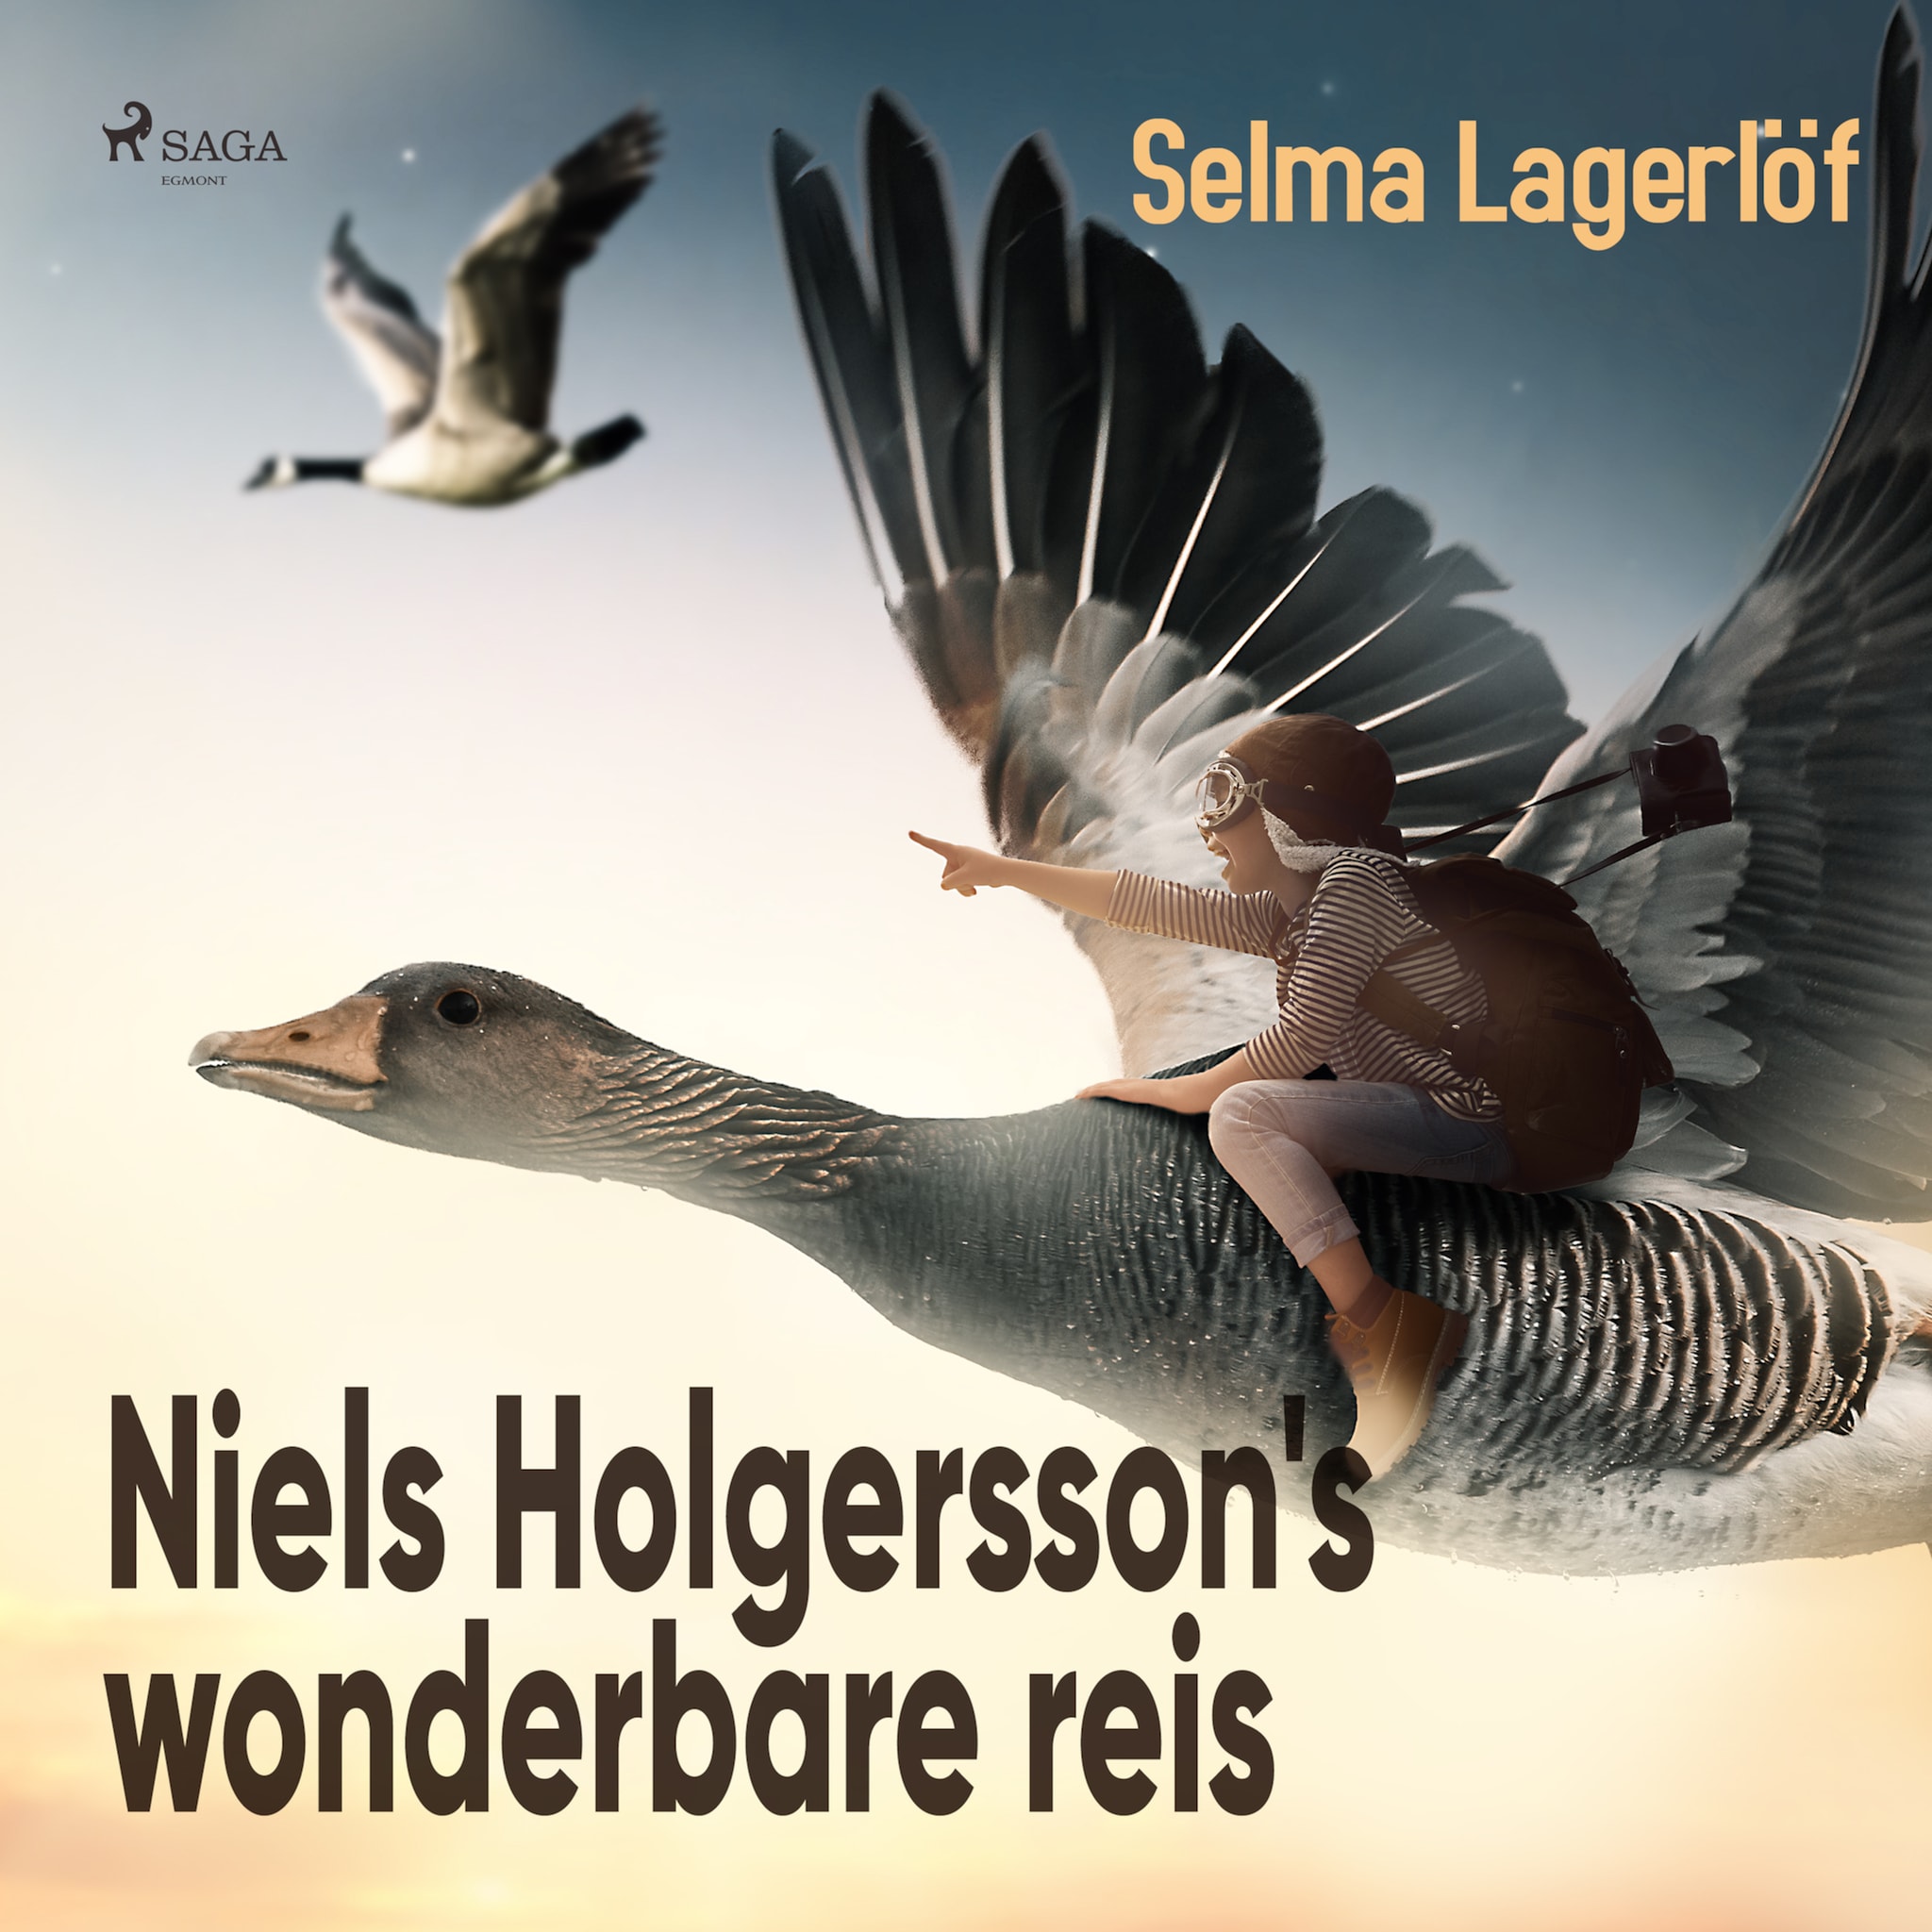 Niels Holgersson”s wonderbare reis ilmaiseksi